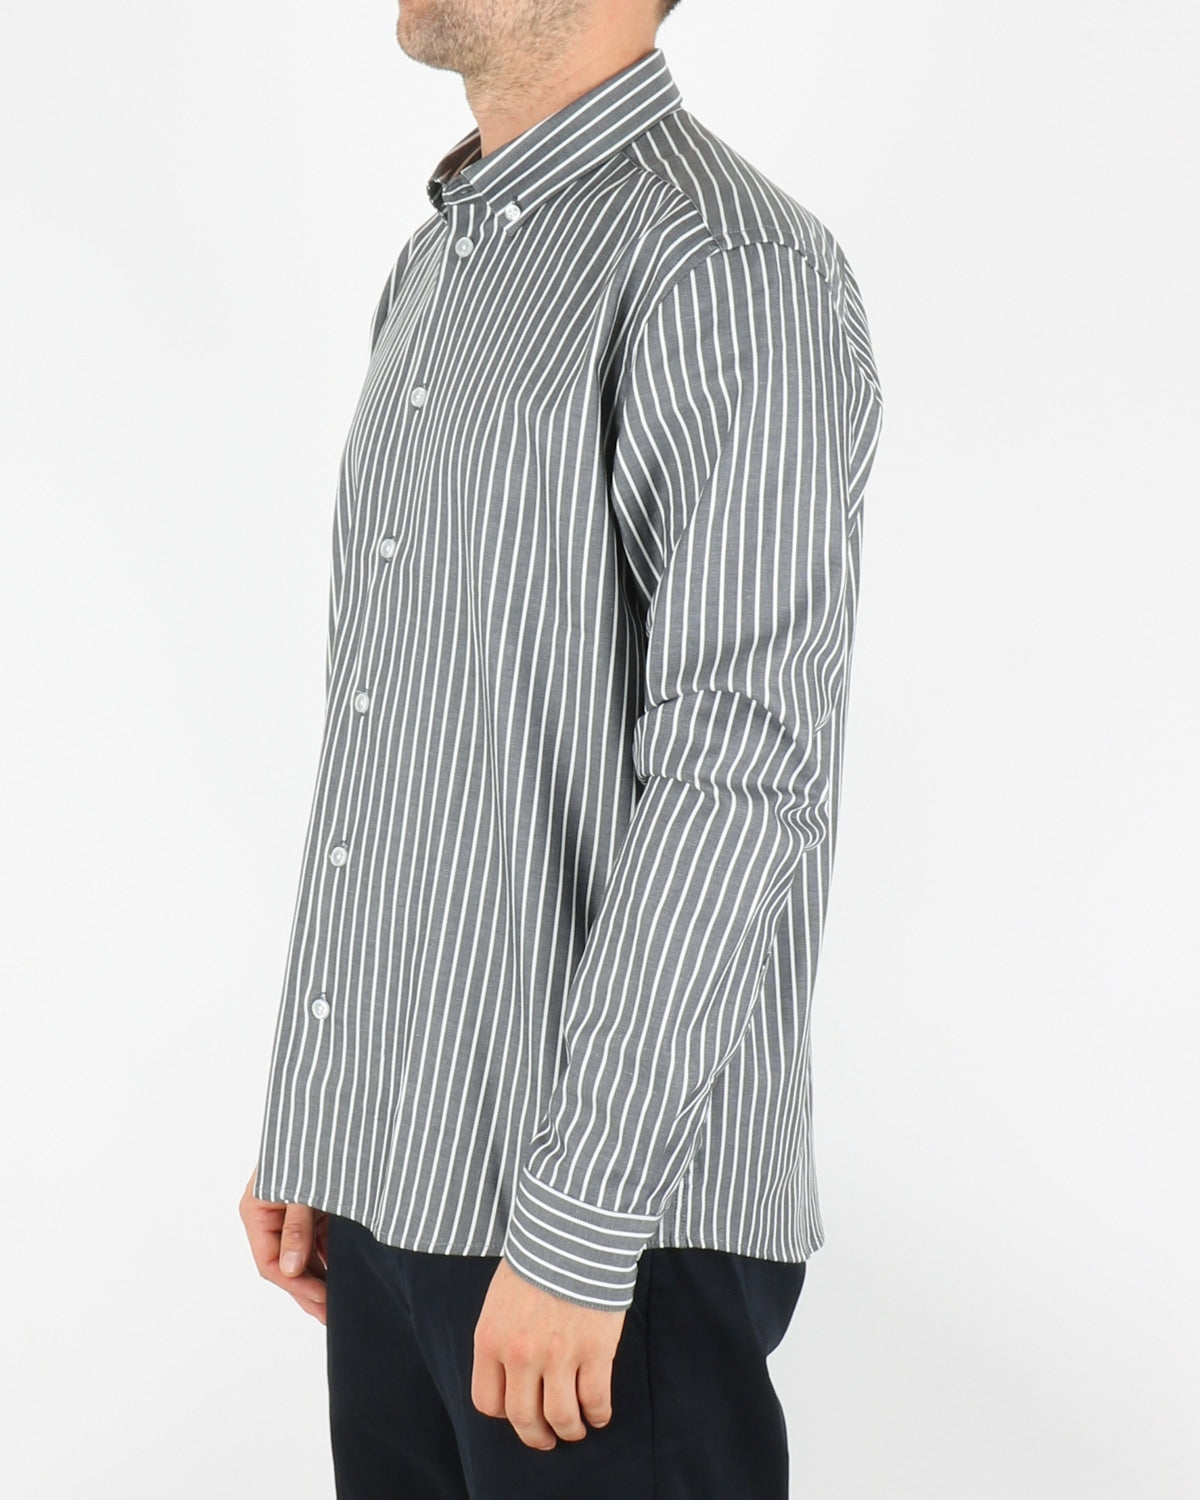 woodbird_trime stripe shirt_grey white_2_3